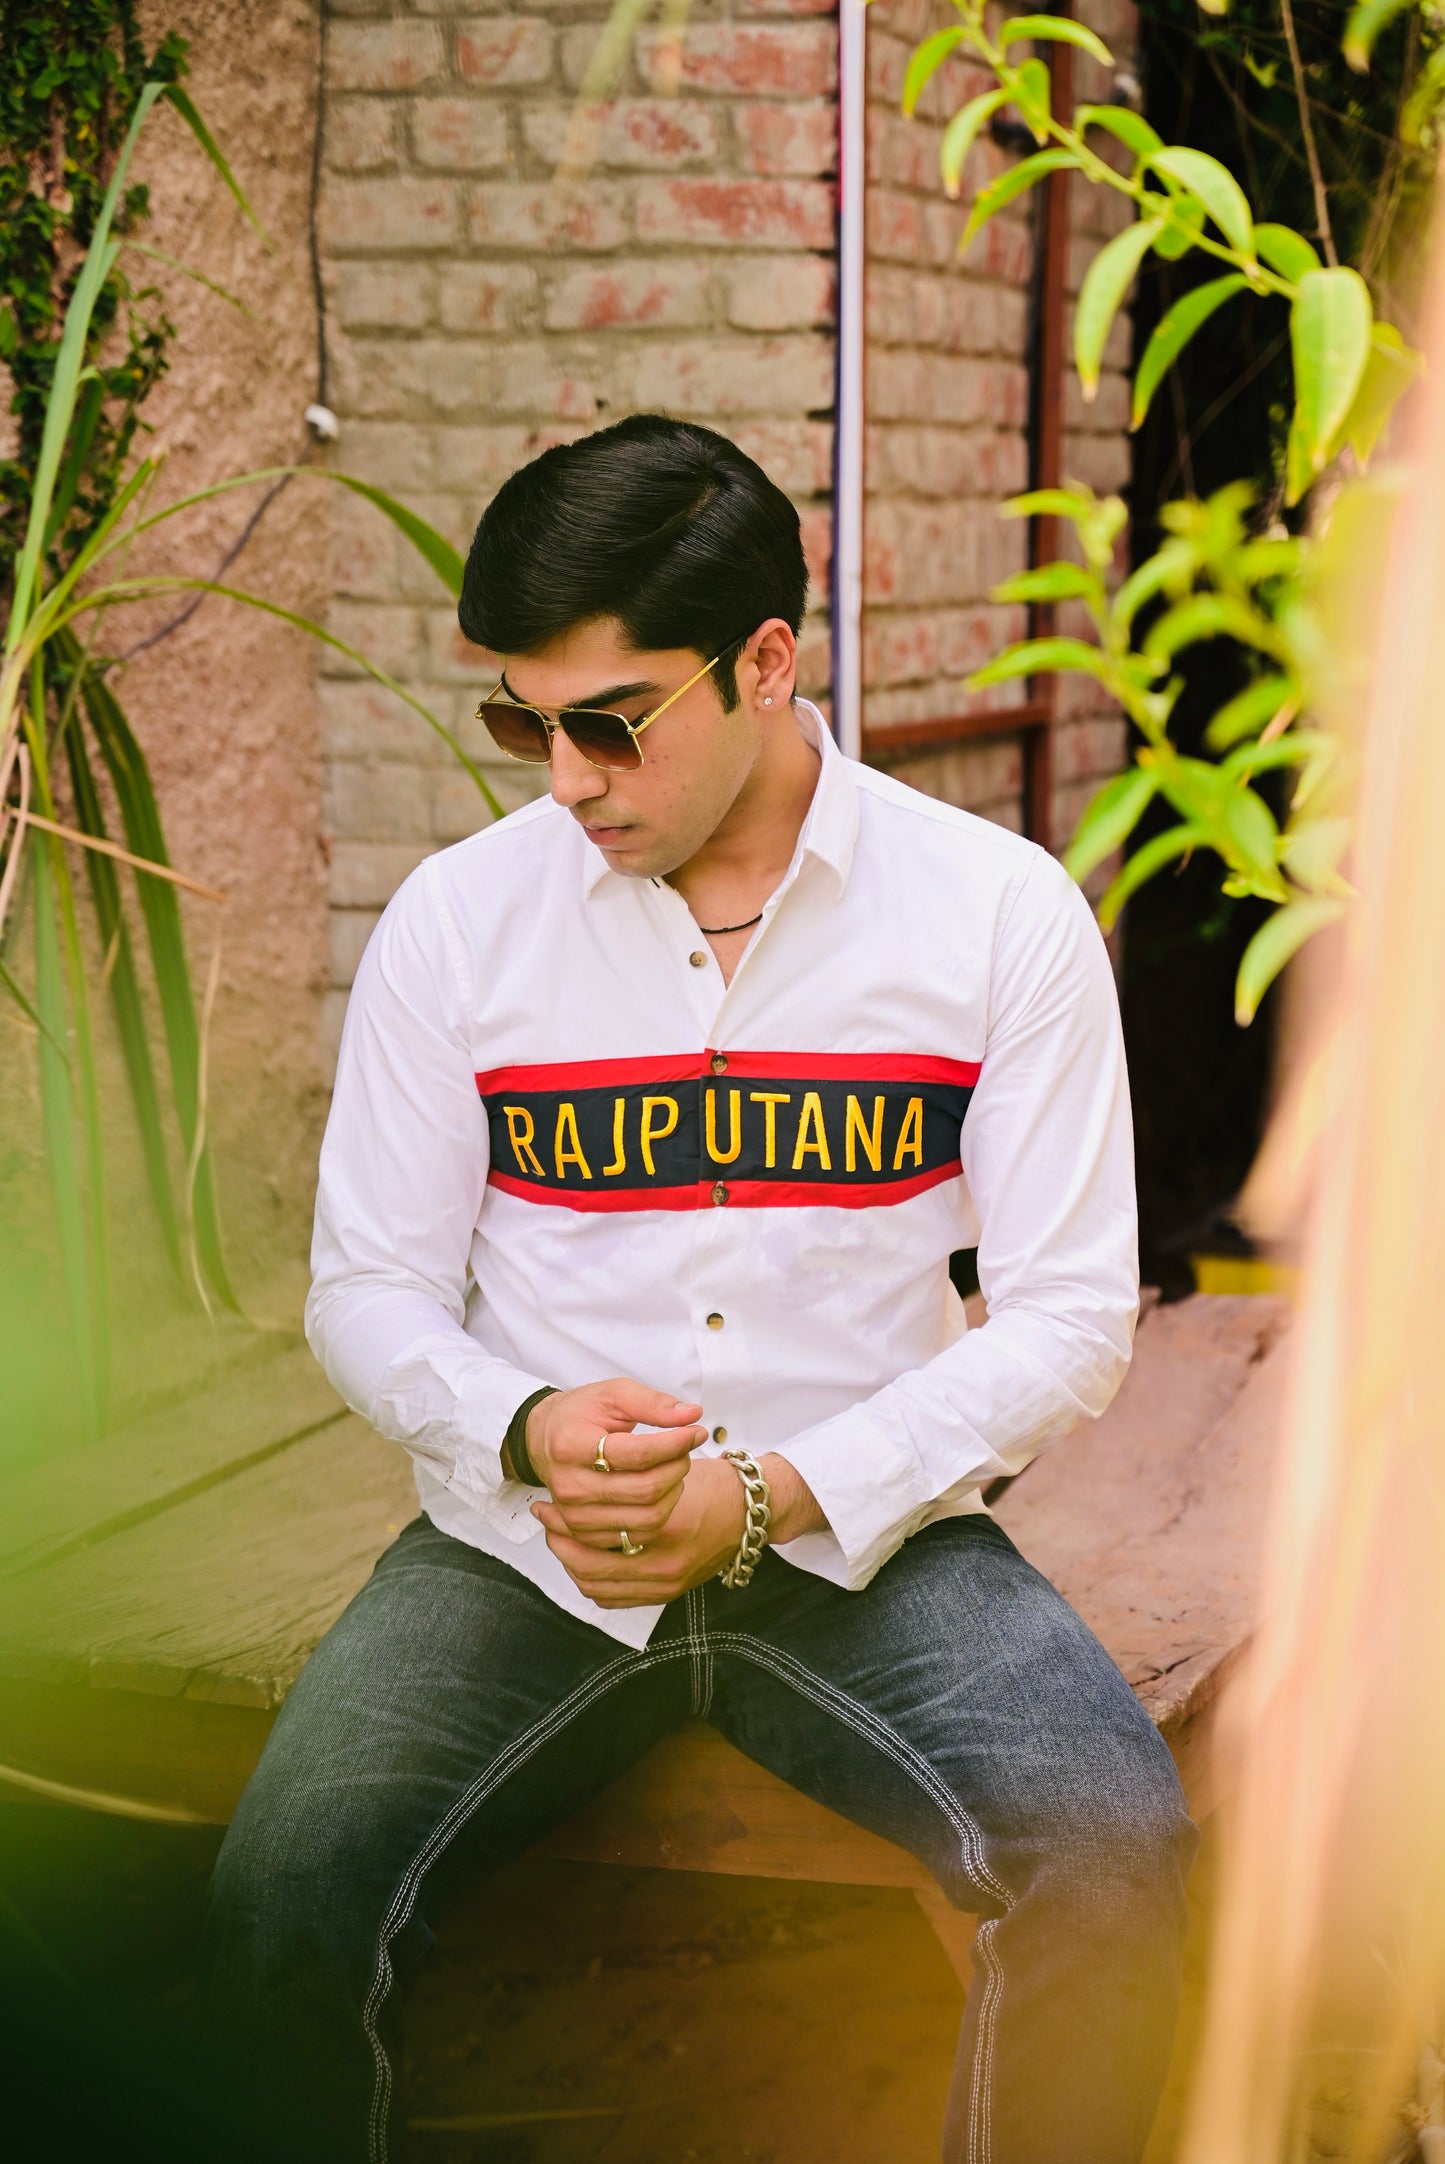 Red Stripe White Rajputana Cotton Shirt